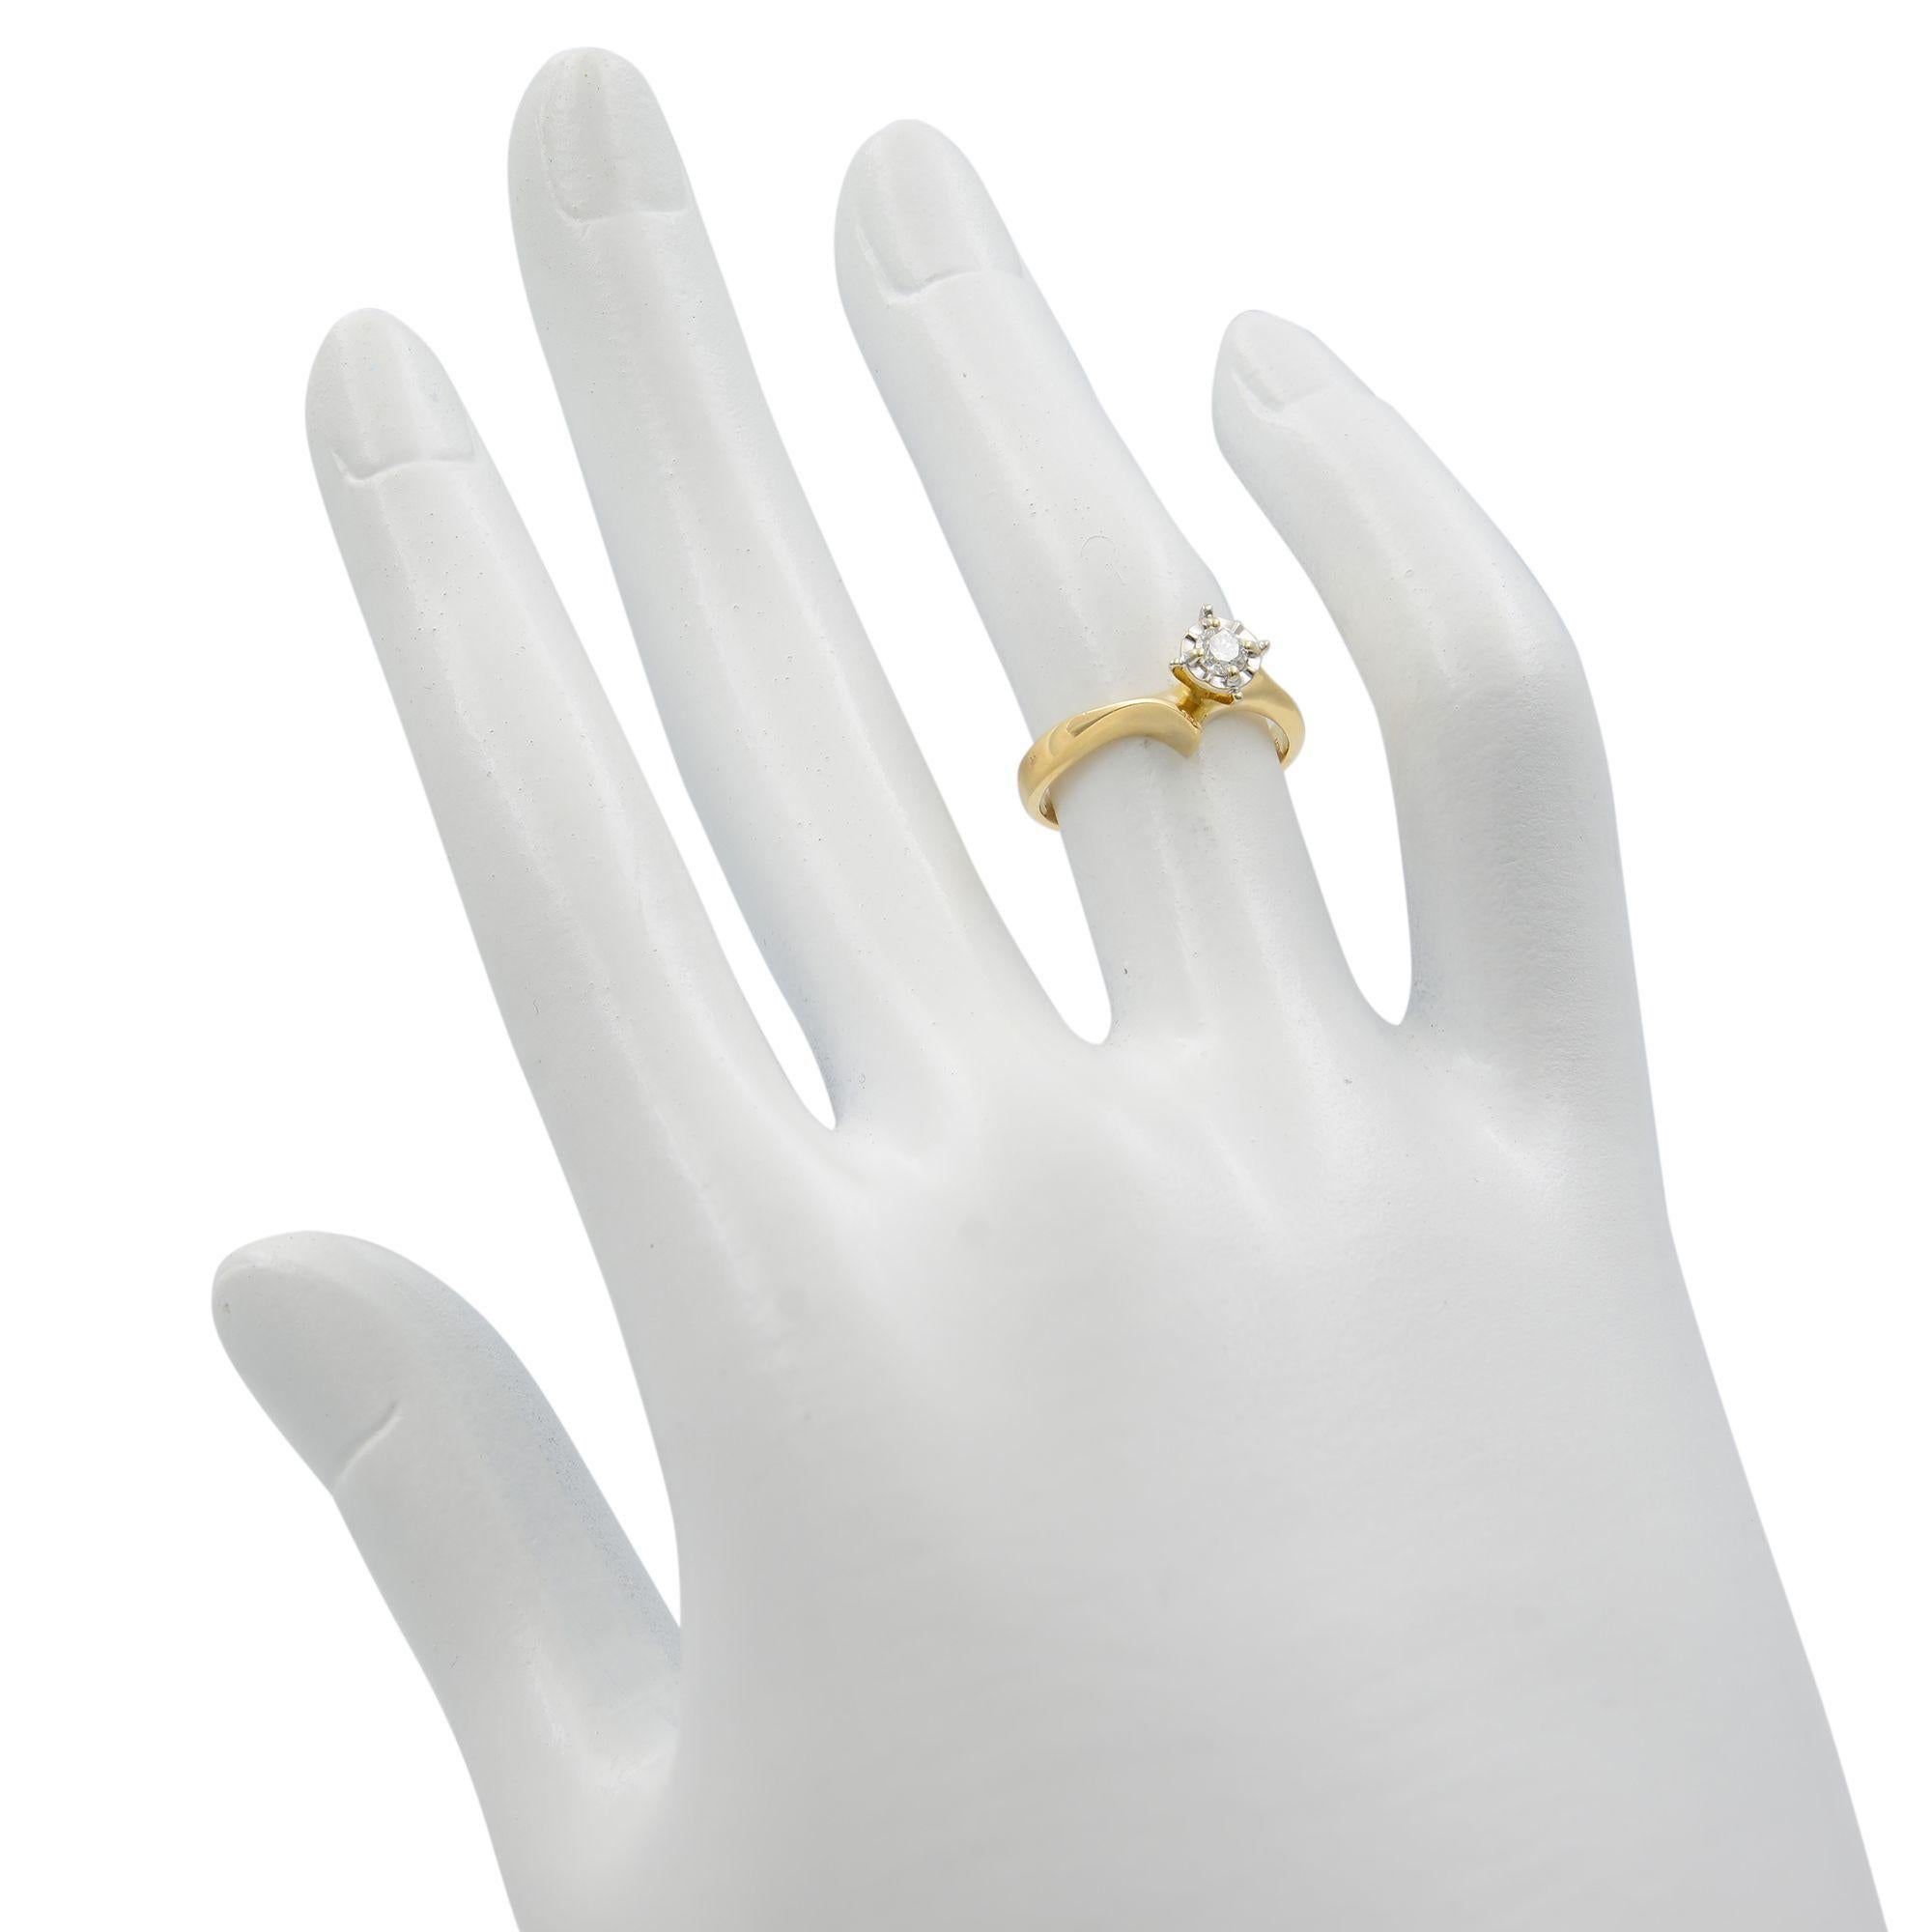 Rachel Koen Round Cut Small Diamond Engagement Ring 14K Yellow Gold 0.15cttw For Sale 1